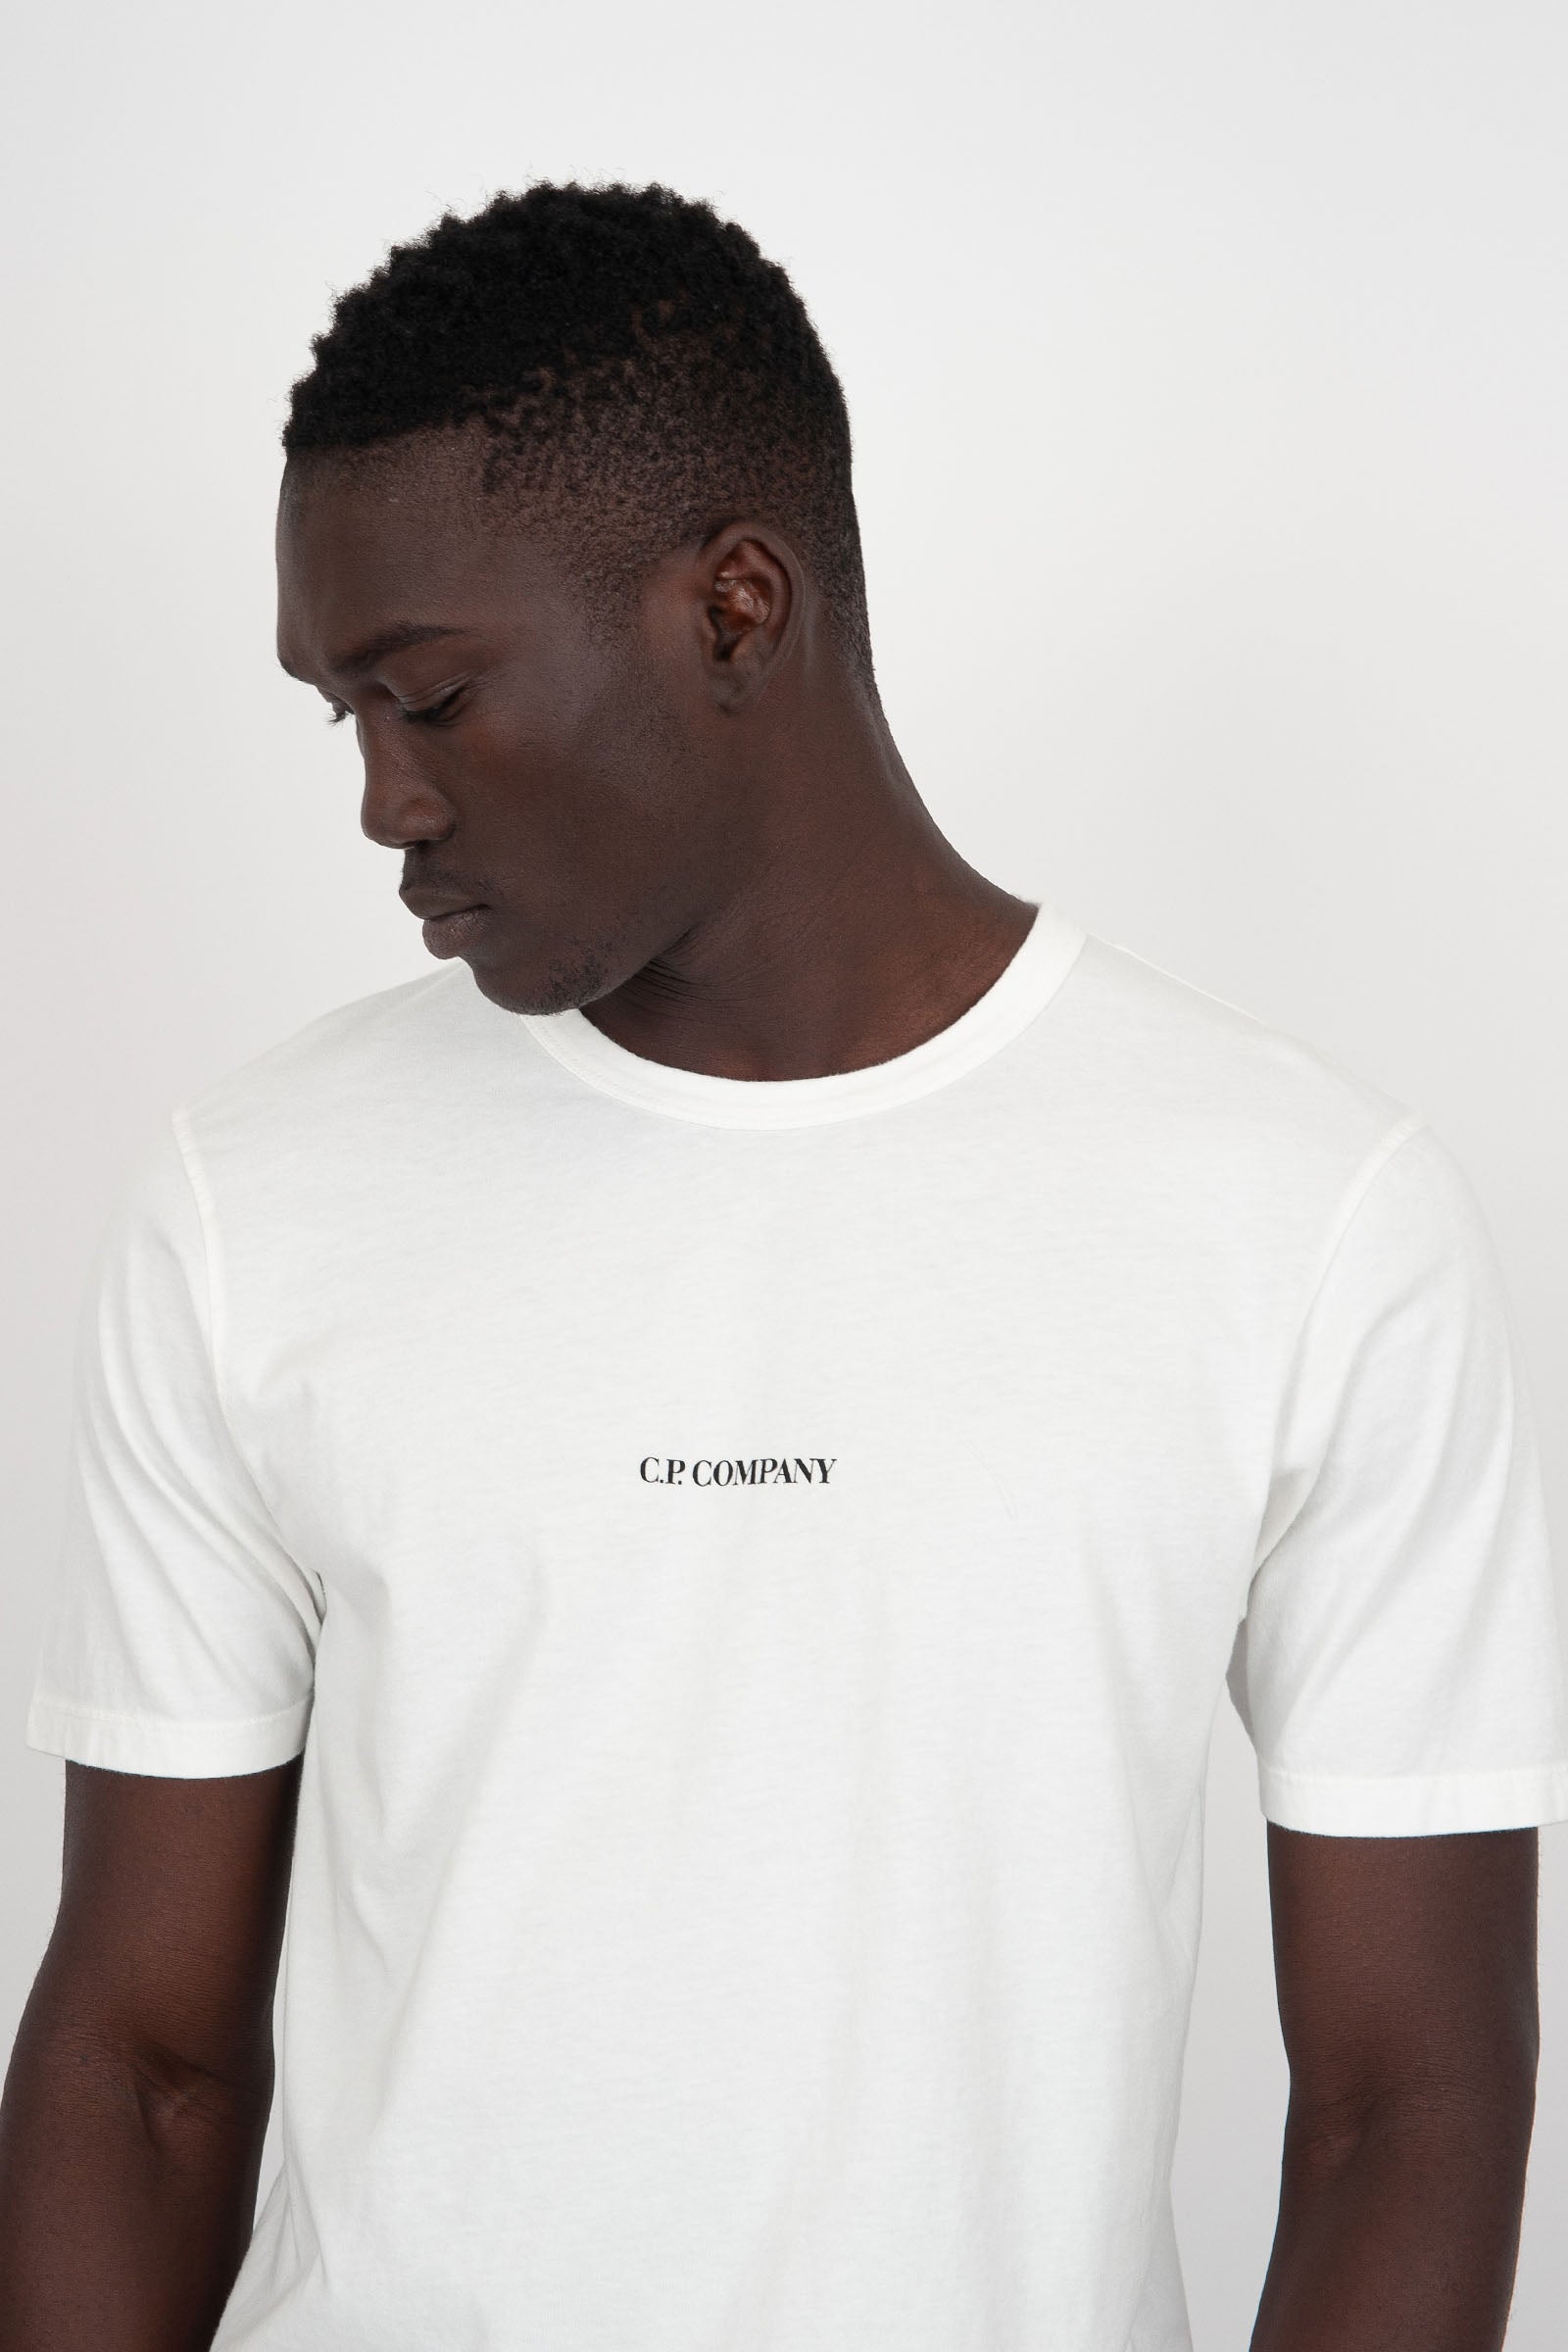 C.P. Company T-shirt 24/1 Cotton Jersey White - 1